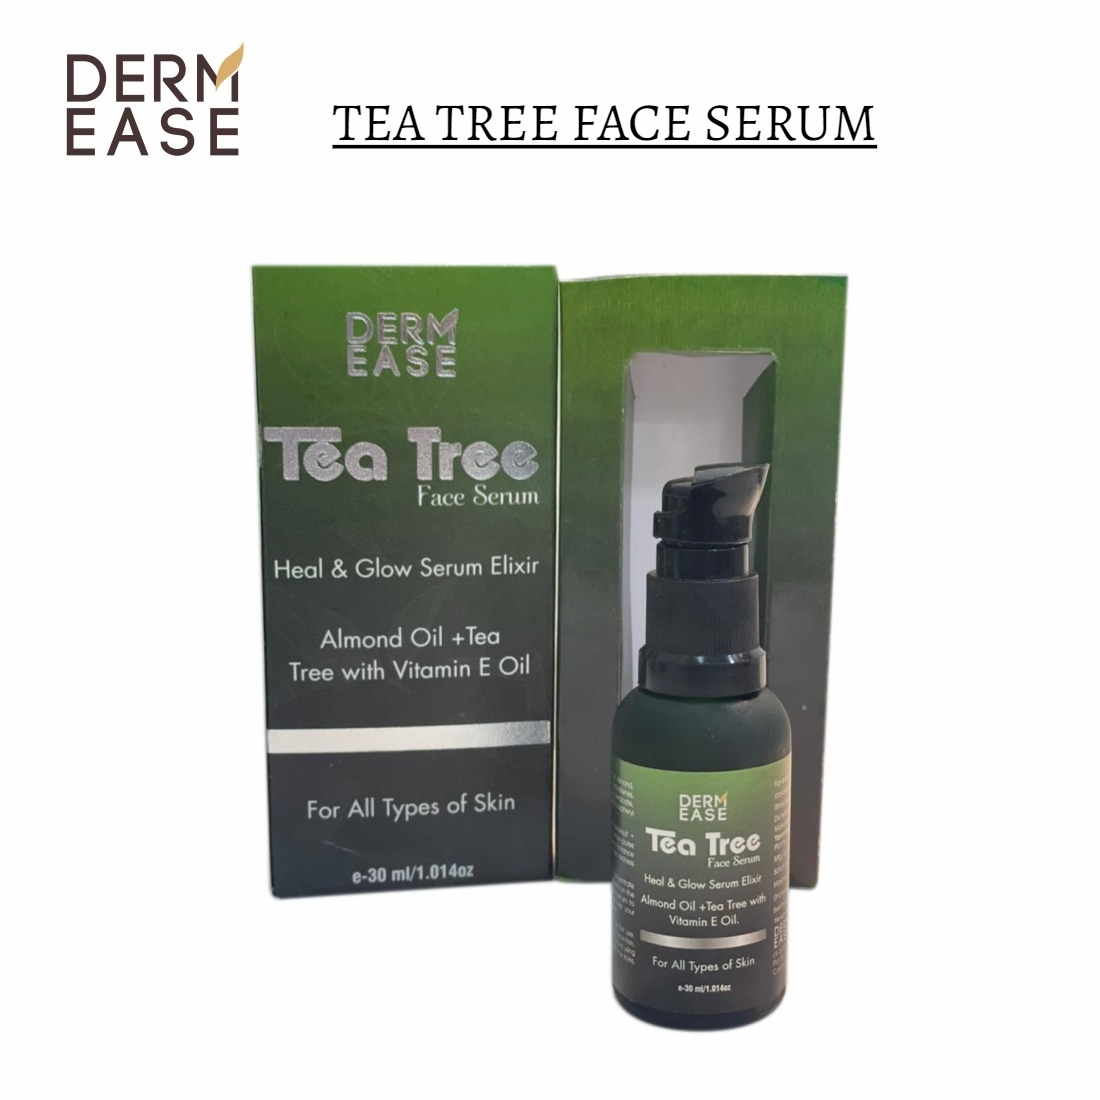 DERM EASE Tea Tree Face Serum